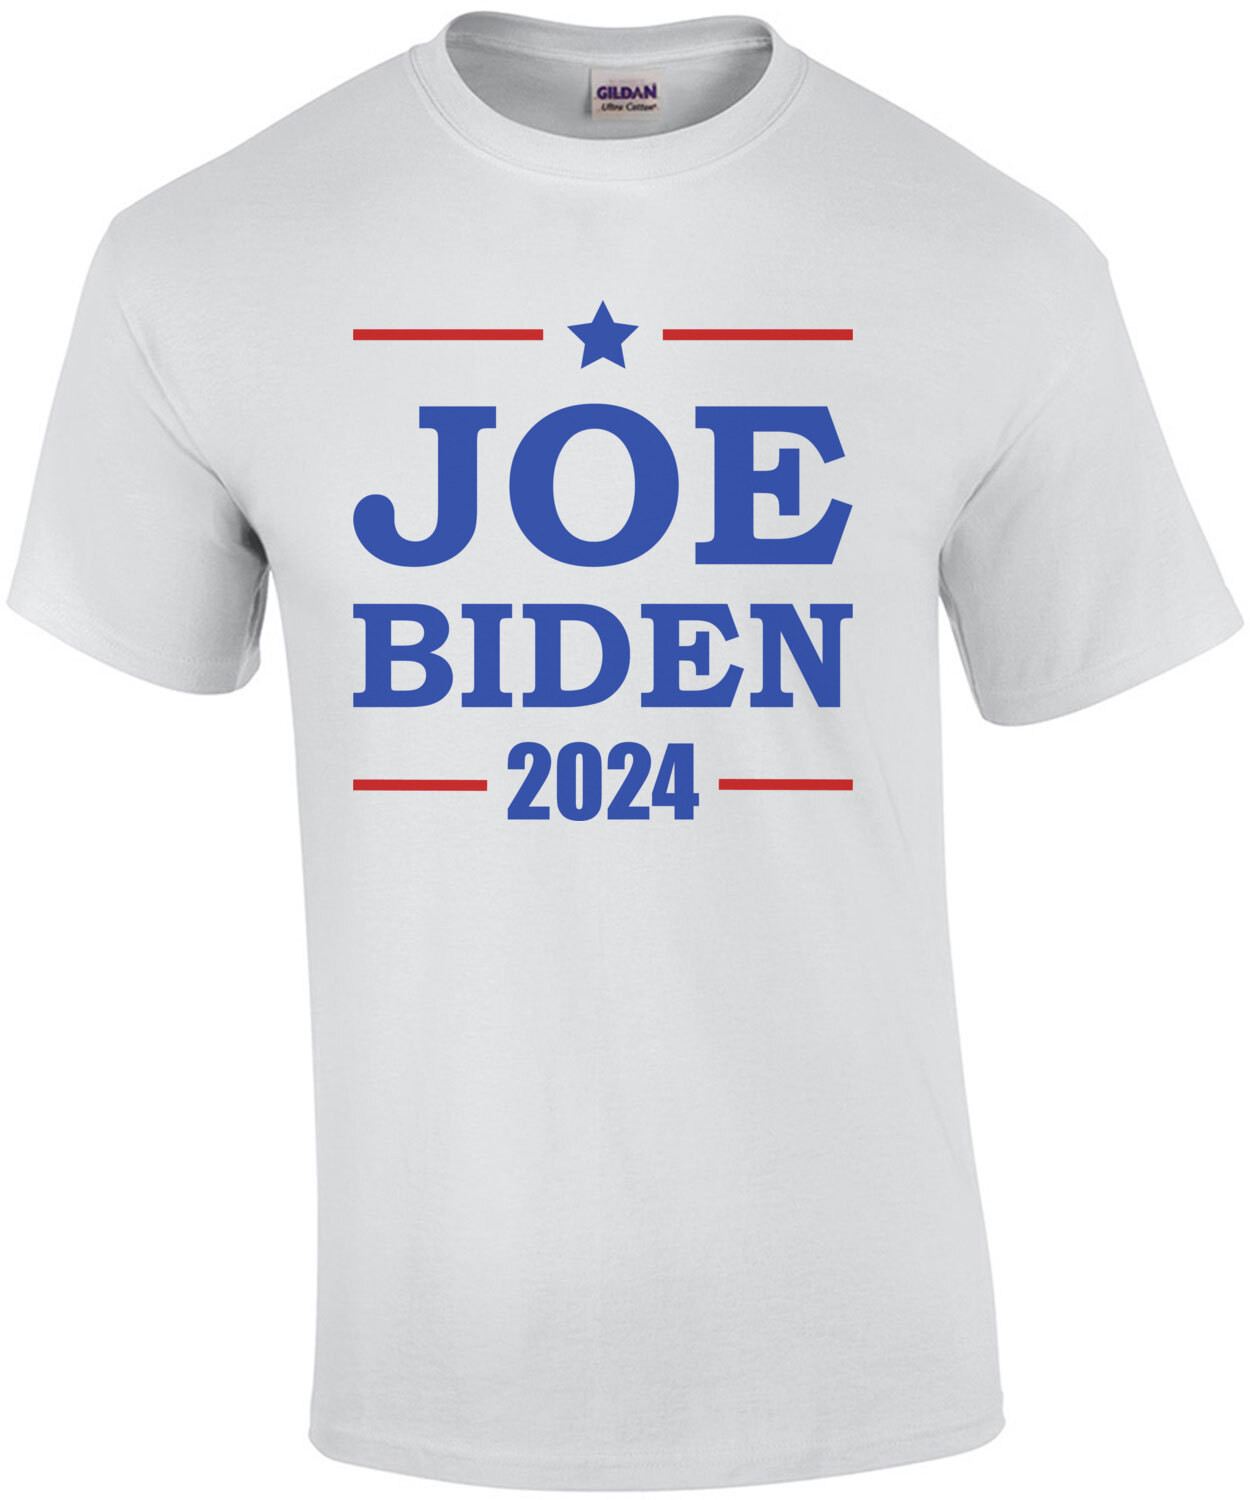 Joe Biden '24 - 2024 Election T-Shirt